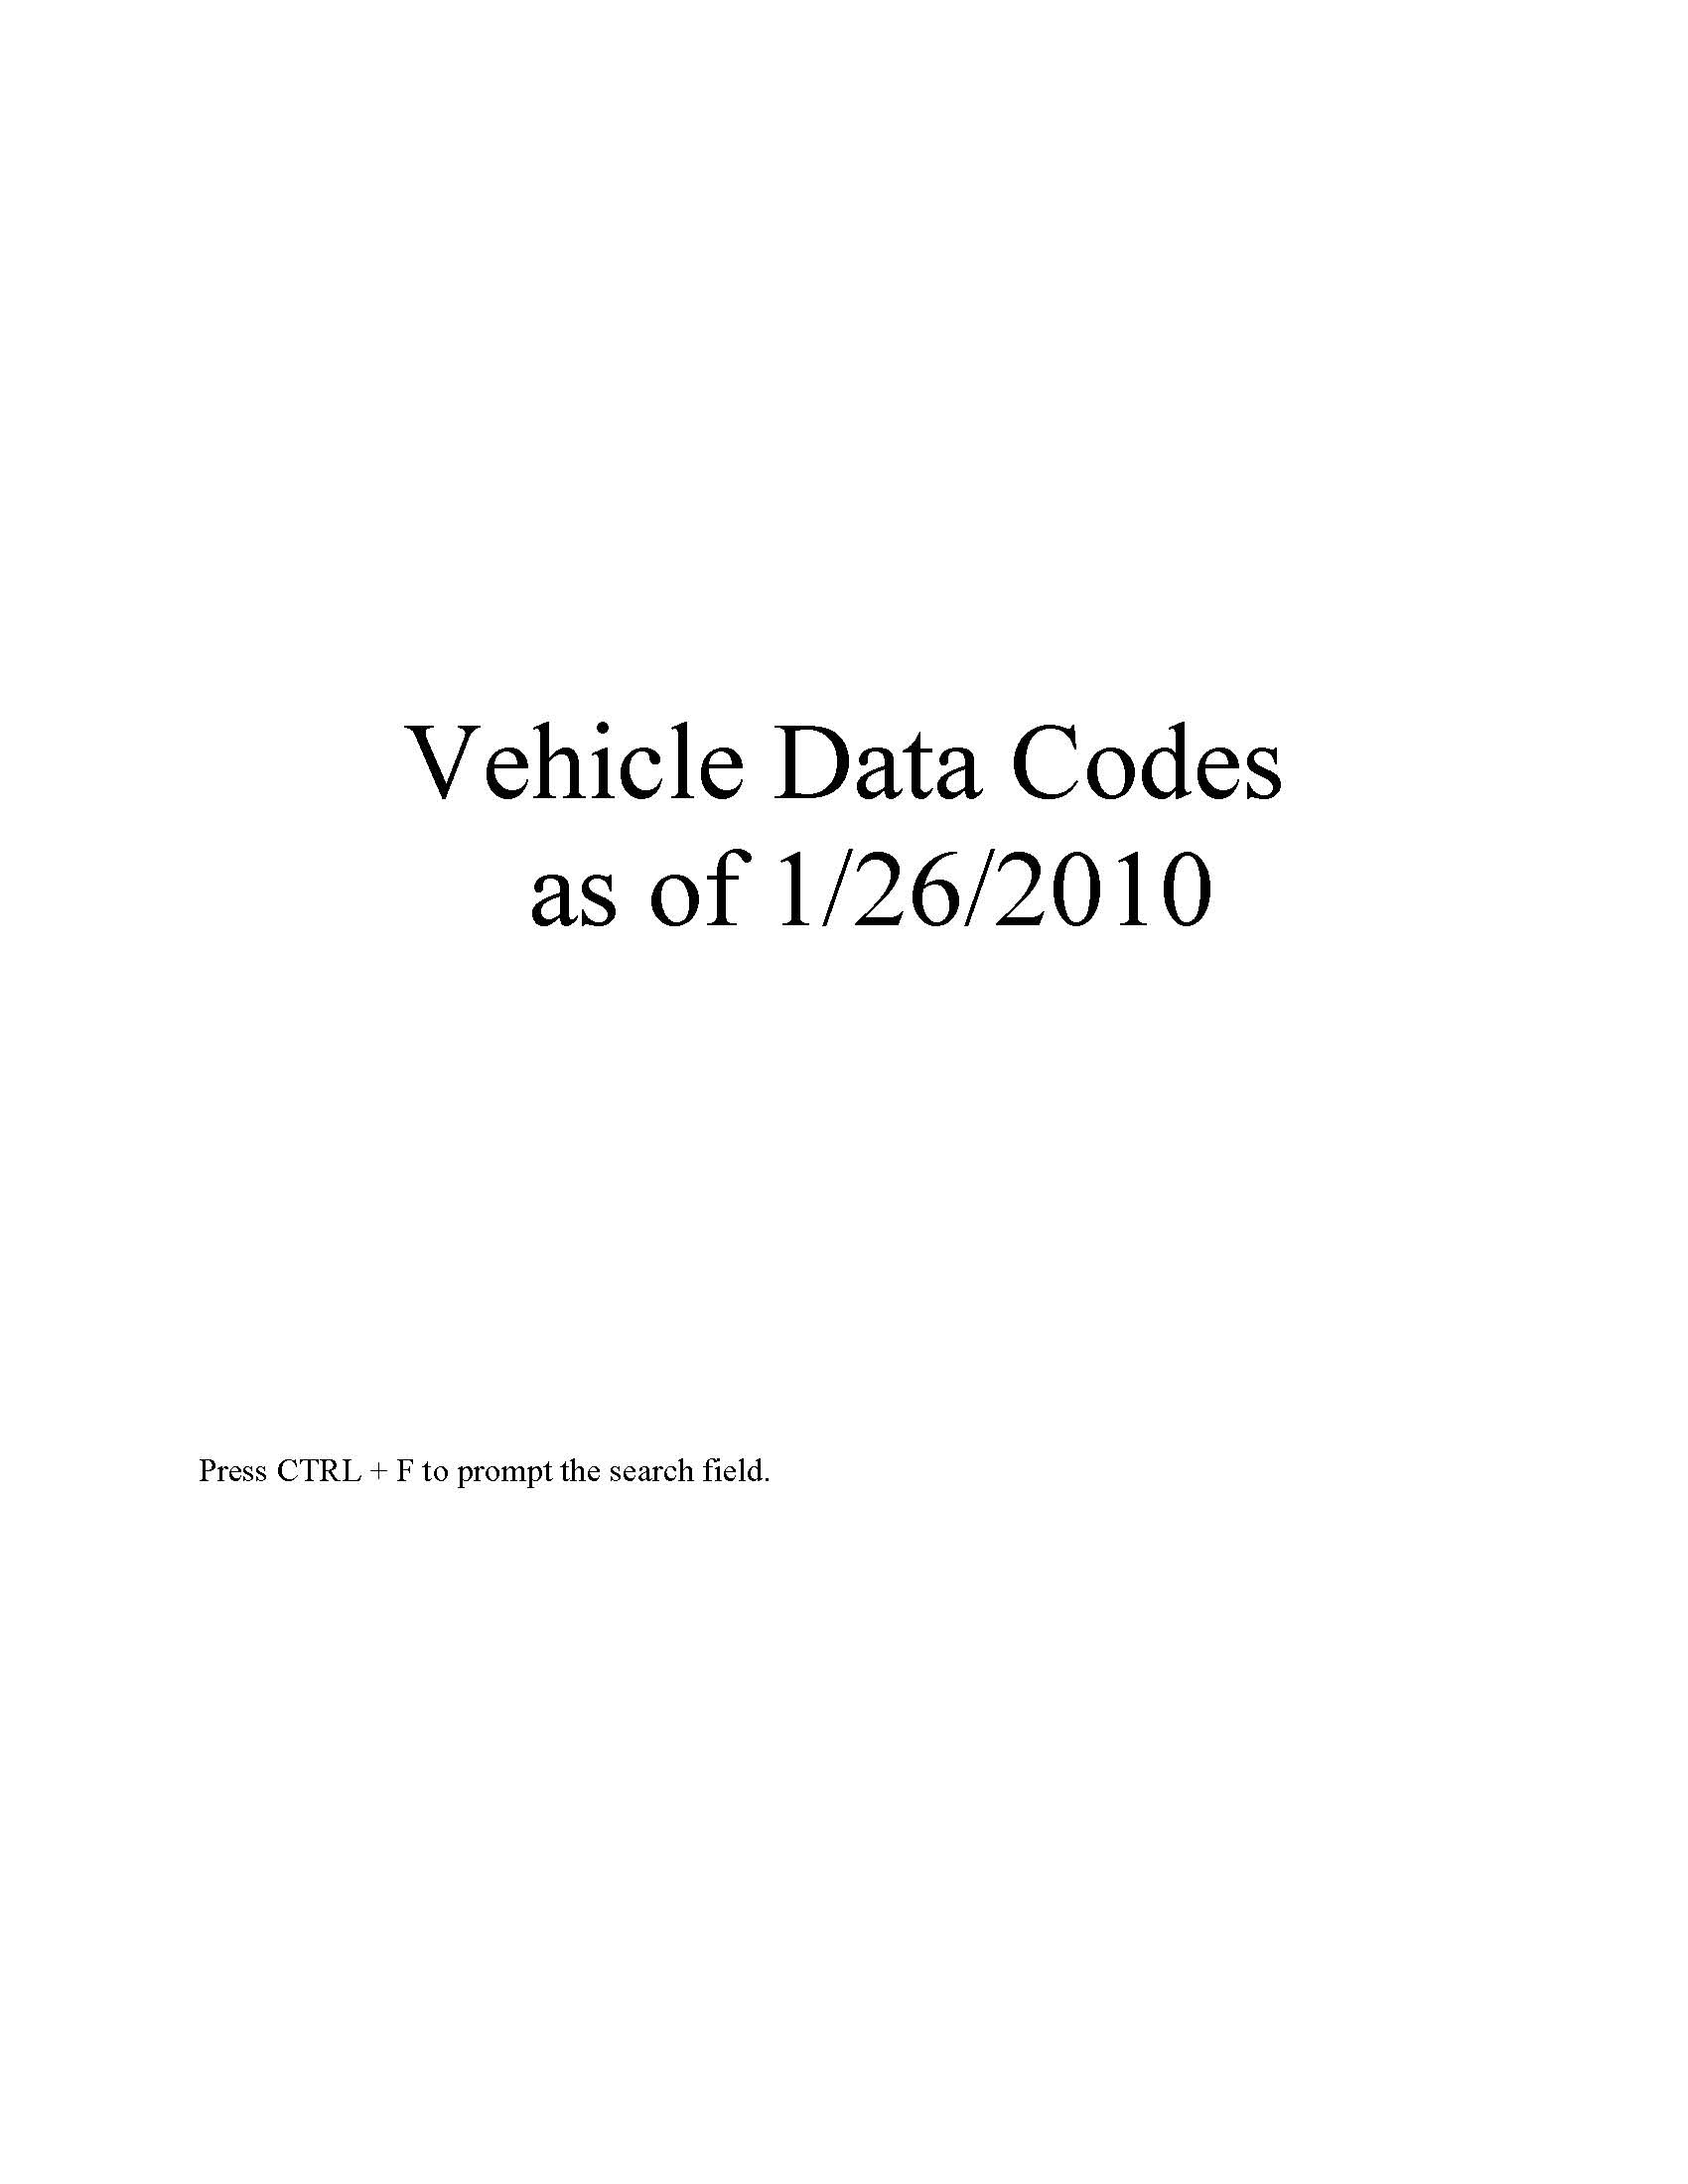 National Crime Information Center (NCIC) Vehicle Data Codes Public